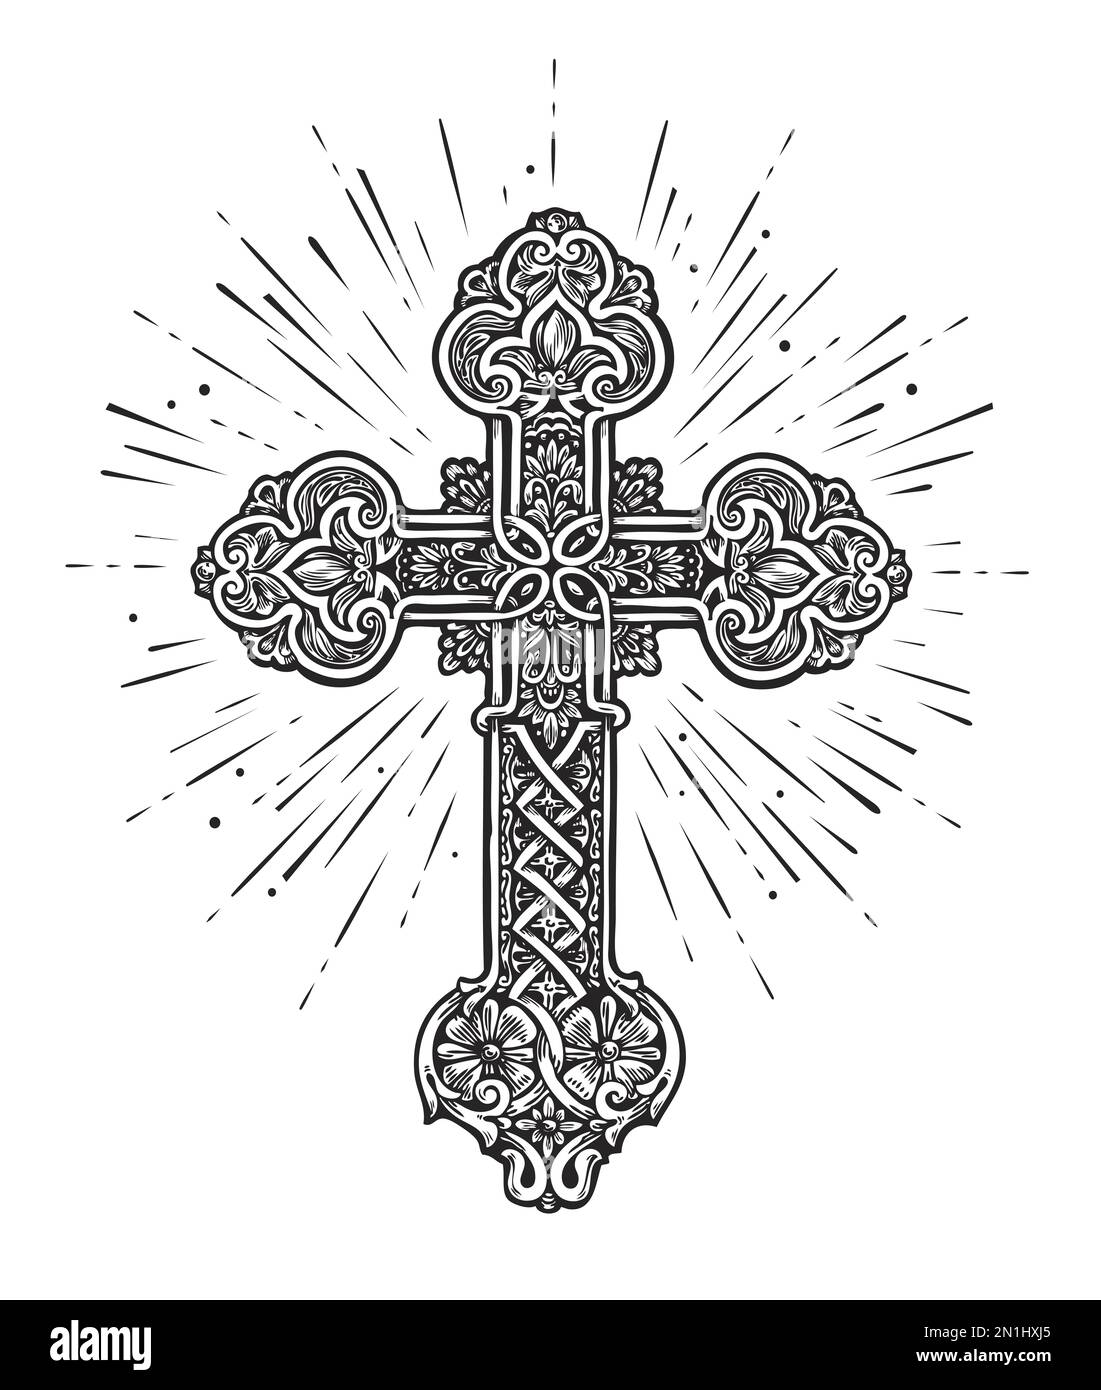 Cross and rays of radiance. Worship, church, bible, prayer symbol. Faith in God sketch illustration Stock Photo